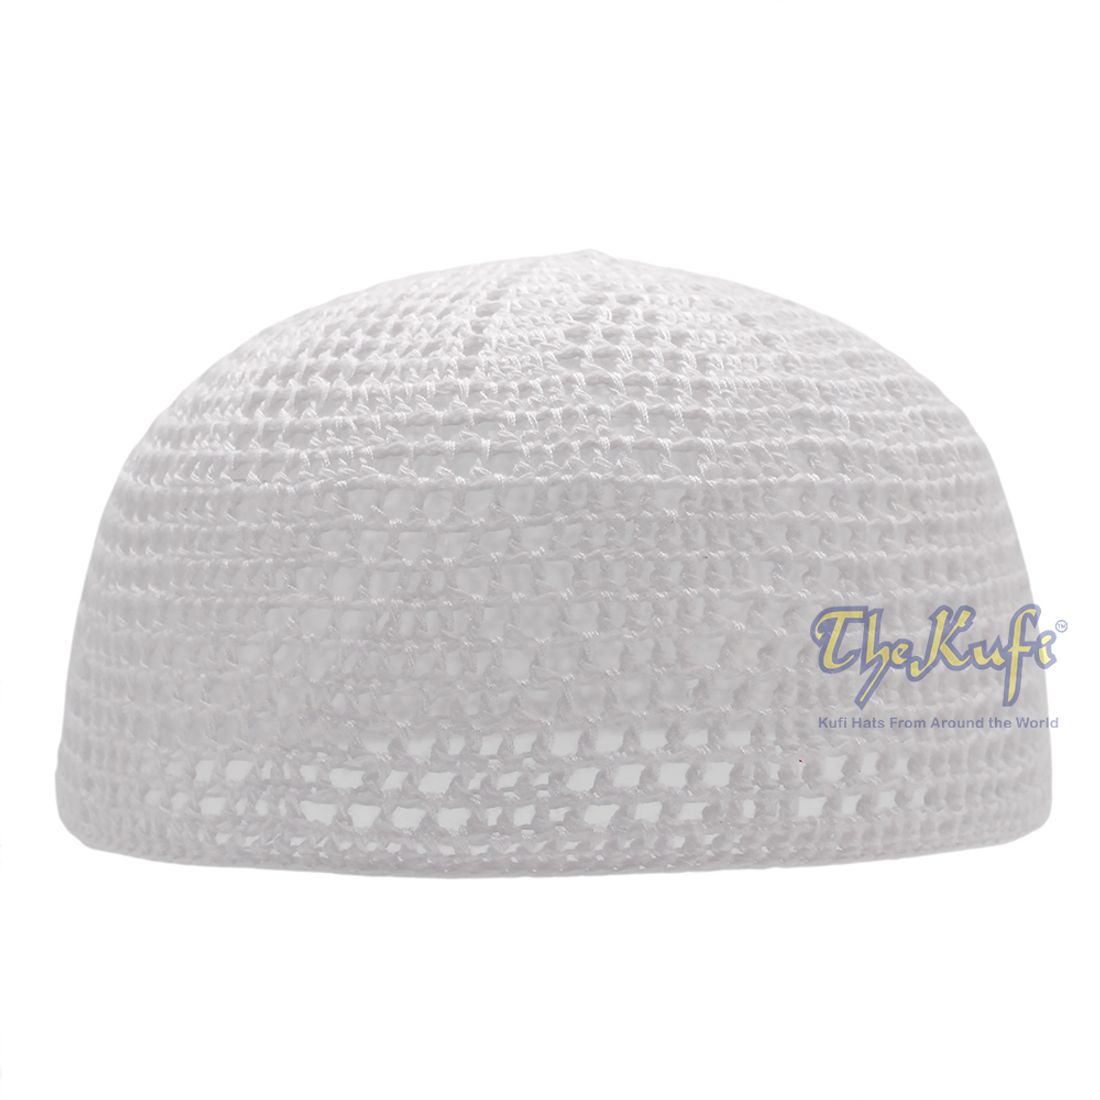 Hand-crochet White Sana Open Weave Kufis Prayer Cap Hat